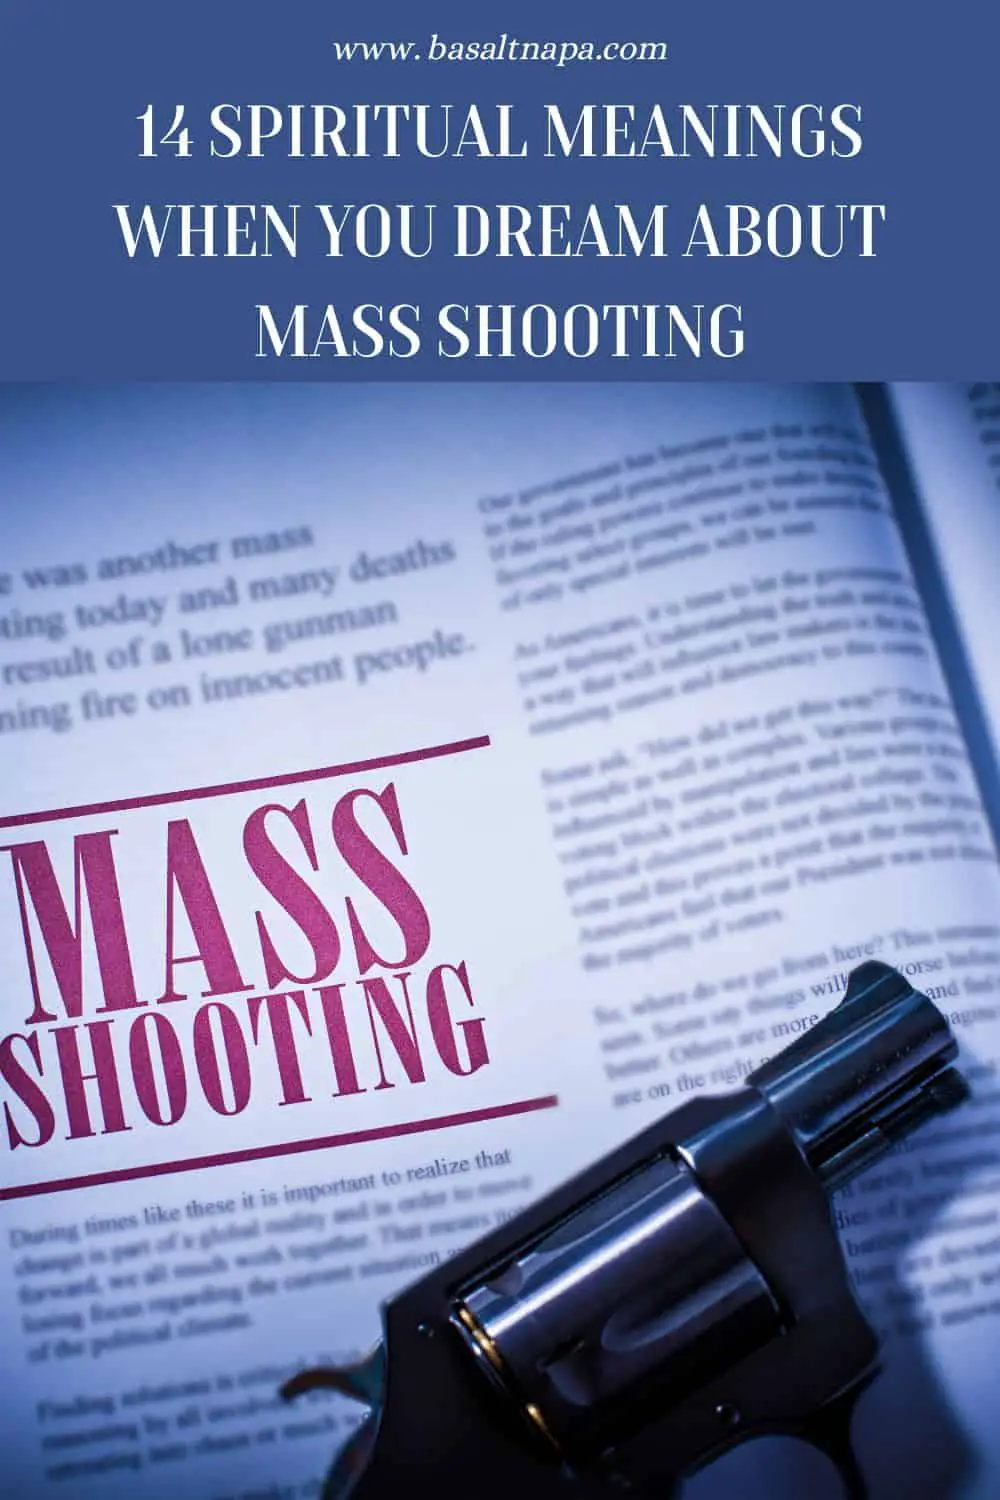 Mass Shooting Dreams